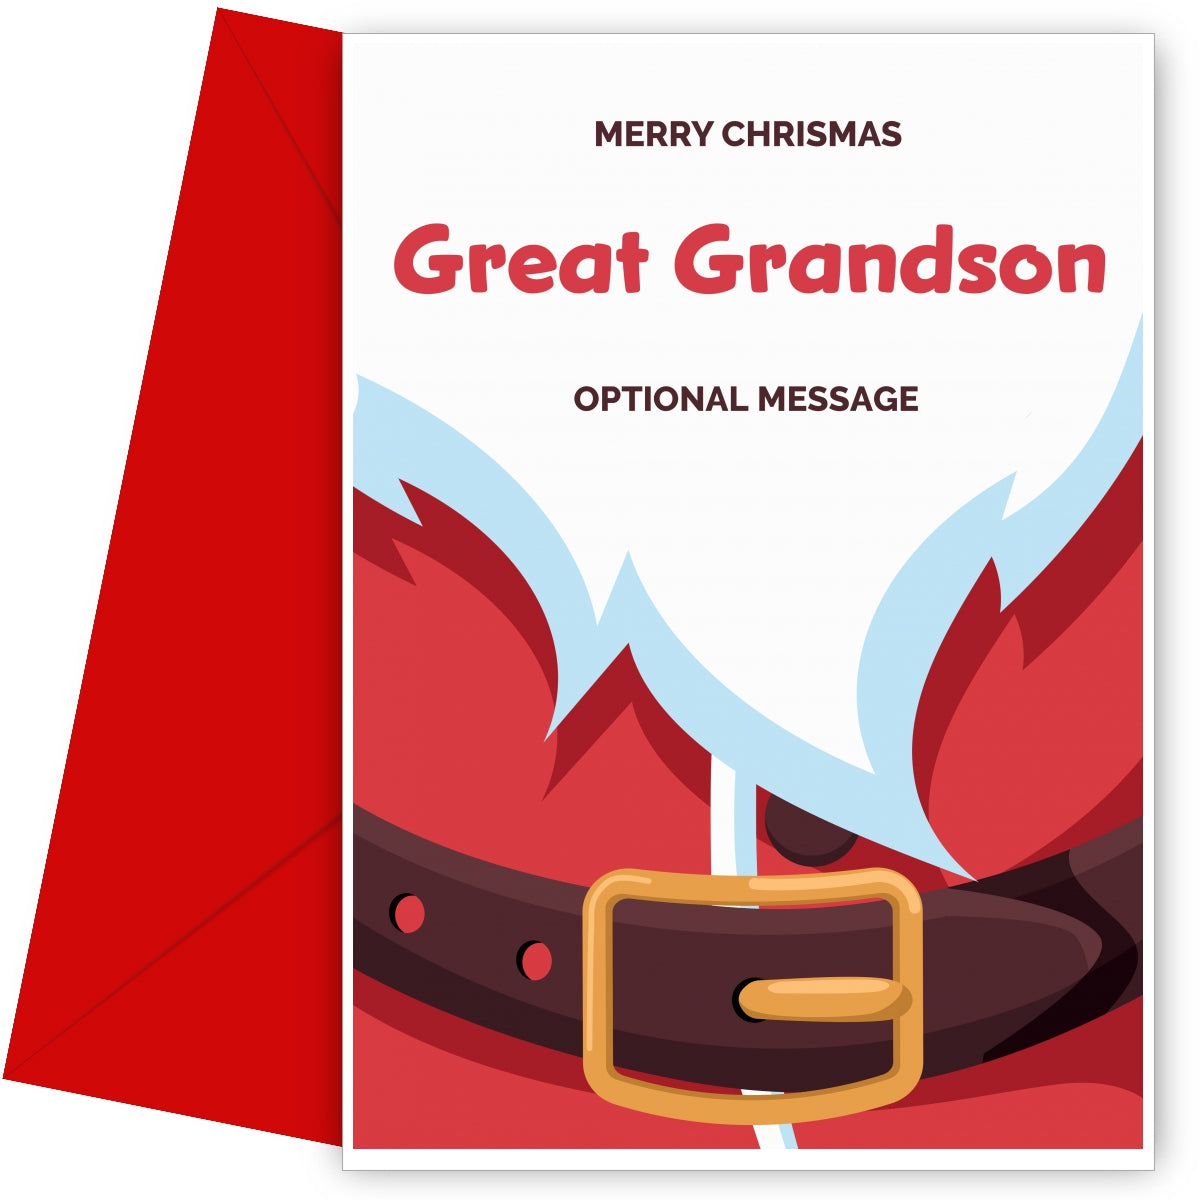 Merry Christmas Card for Great Grandson - Santa Belt